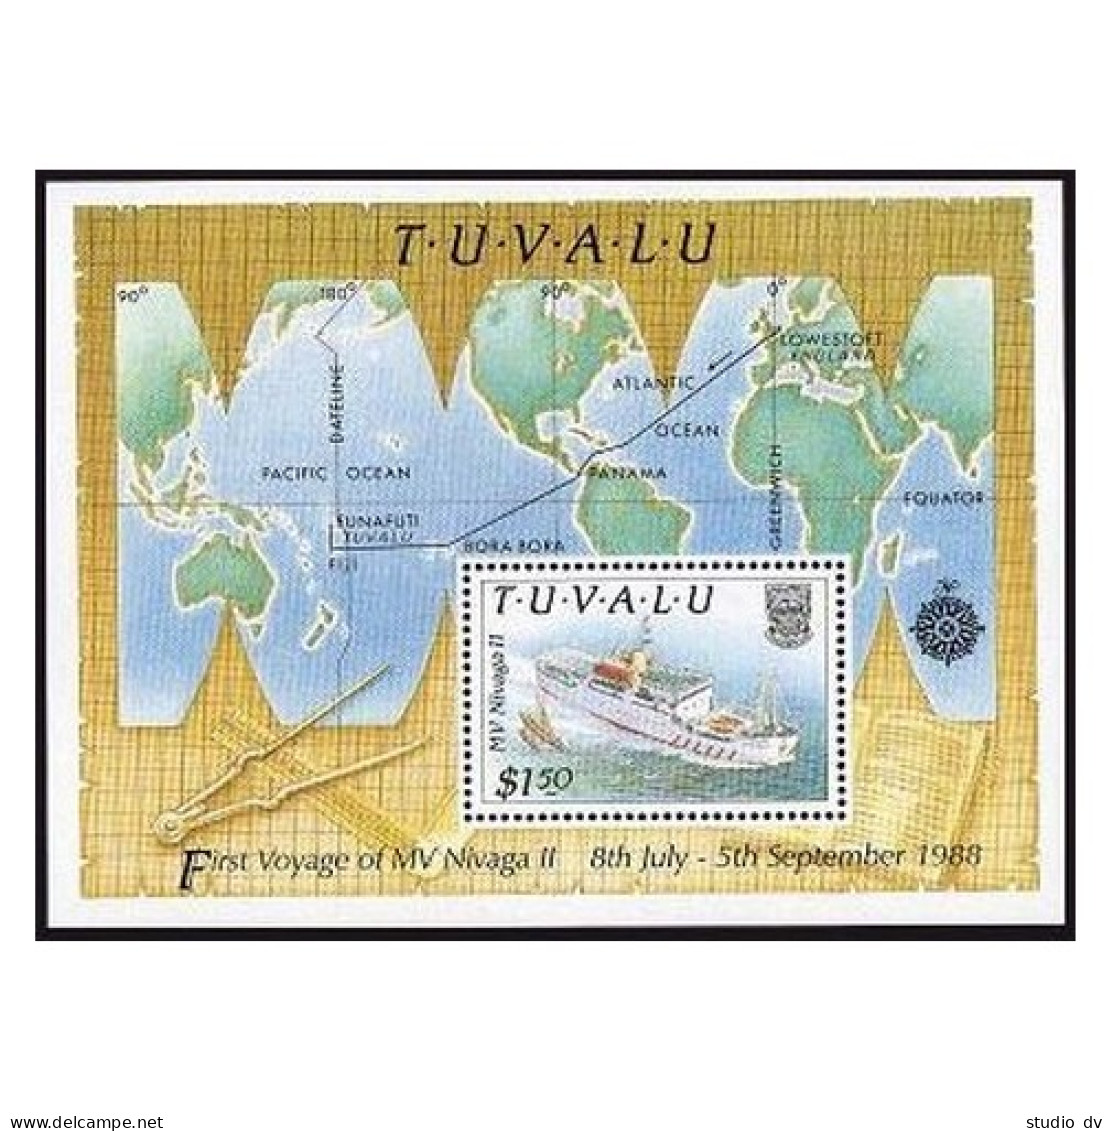 Tuvalu 528 Sheet, MNH. Michel 549 Bl.41. 1st Voyage Of MV Nivaga II, 1988. Map. - Tuvalu